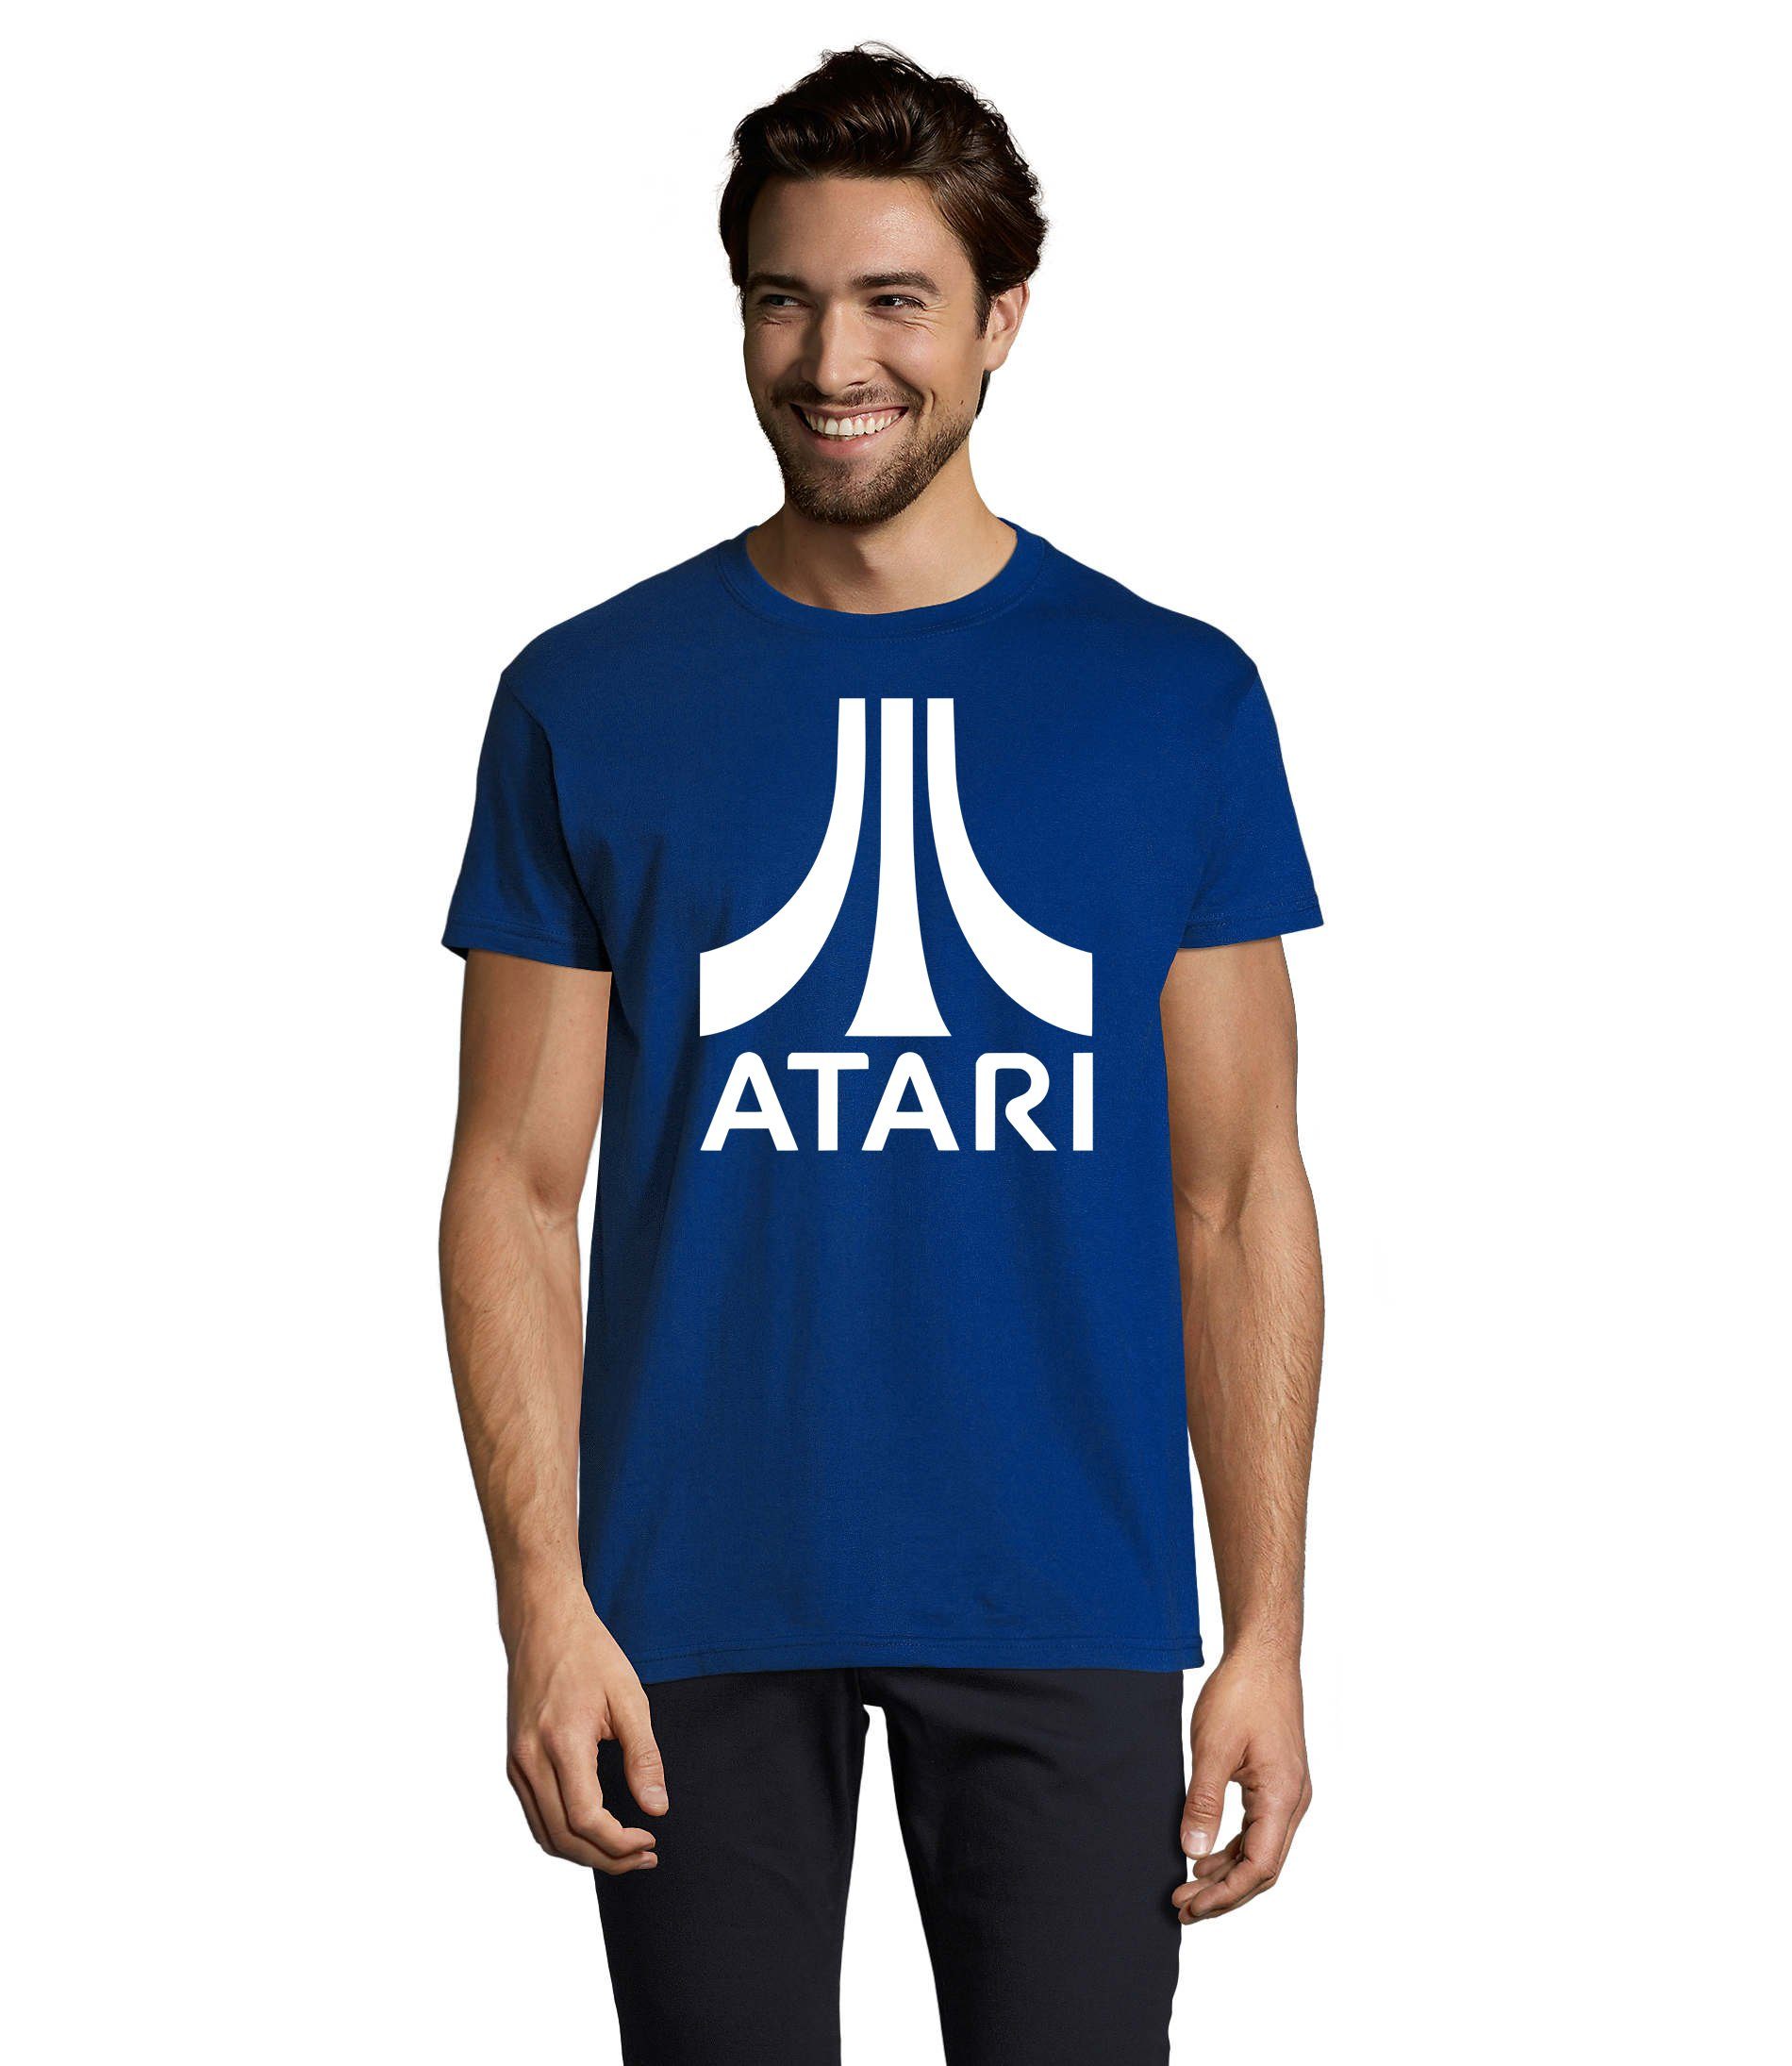 Blondie & Brownie T-Shirt Herren Spiele Gamer Atari Royalblau Nintendo Gaming Konsole